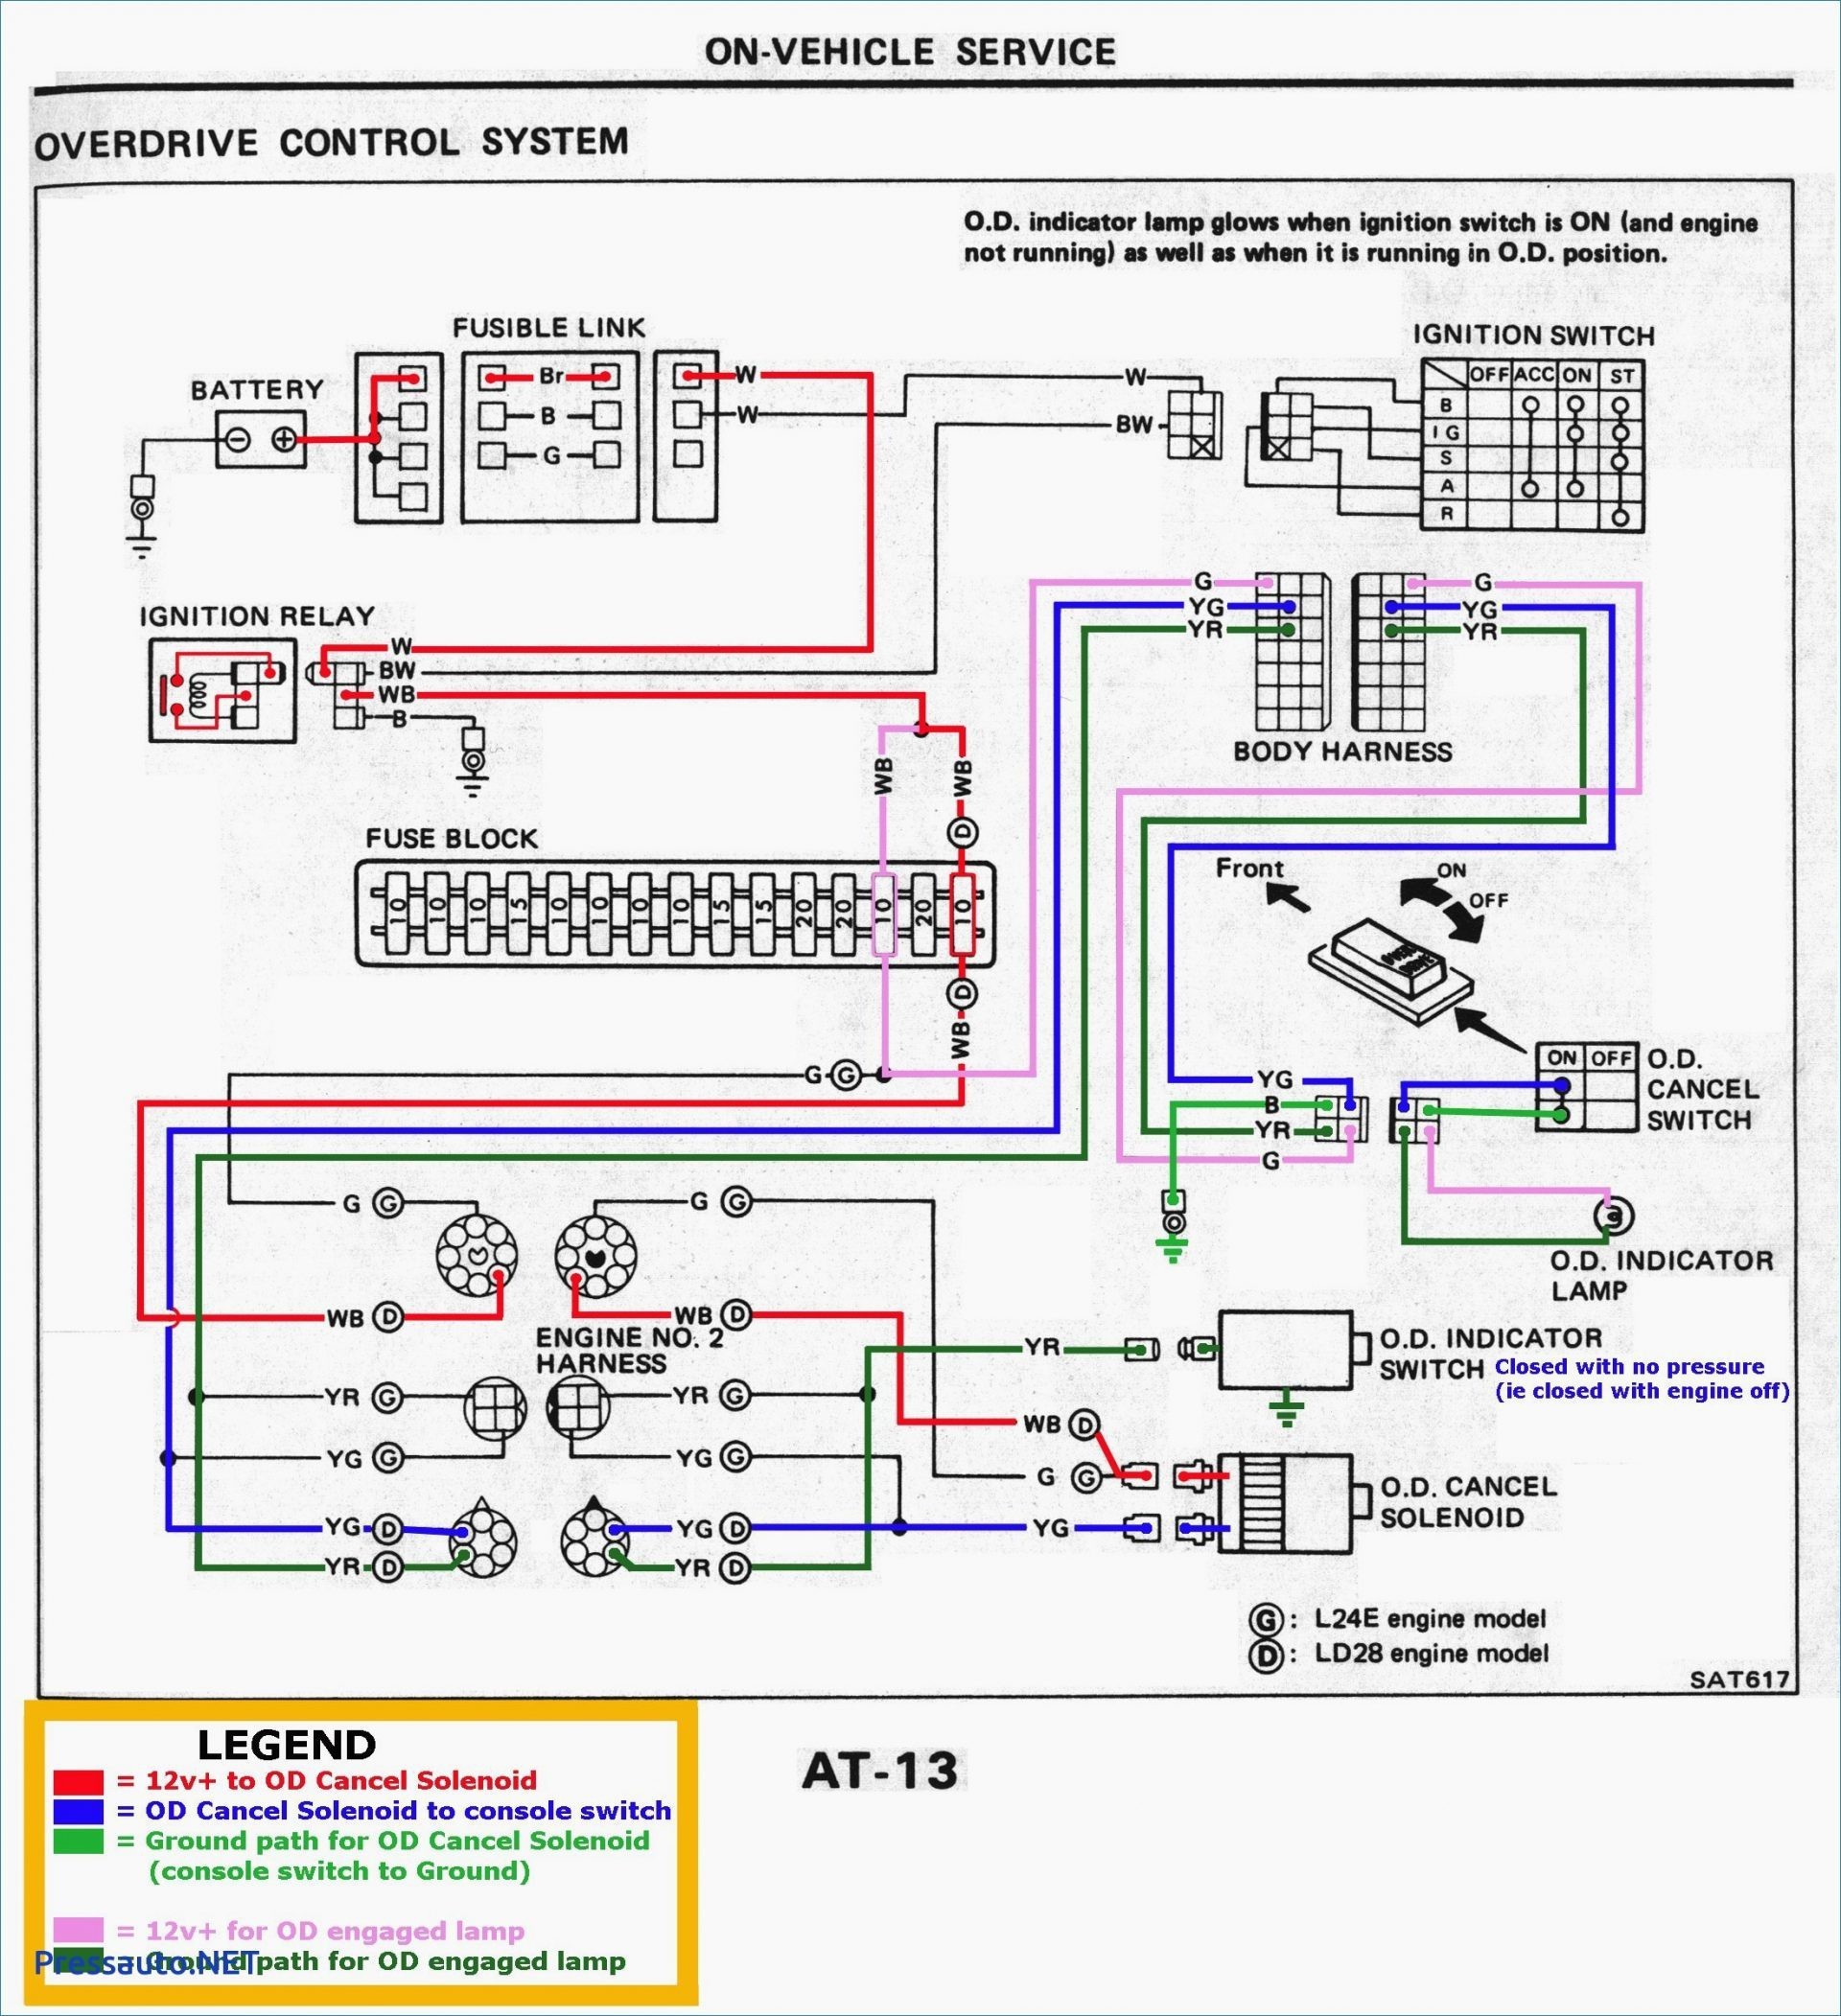 Labeled Dashboard Diagram Of A Car Kia soul Radio Wiring Diagram Schematics Wiring Diagrams • Of Labeled Dashboard Diagram Of A Car